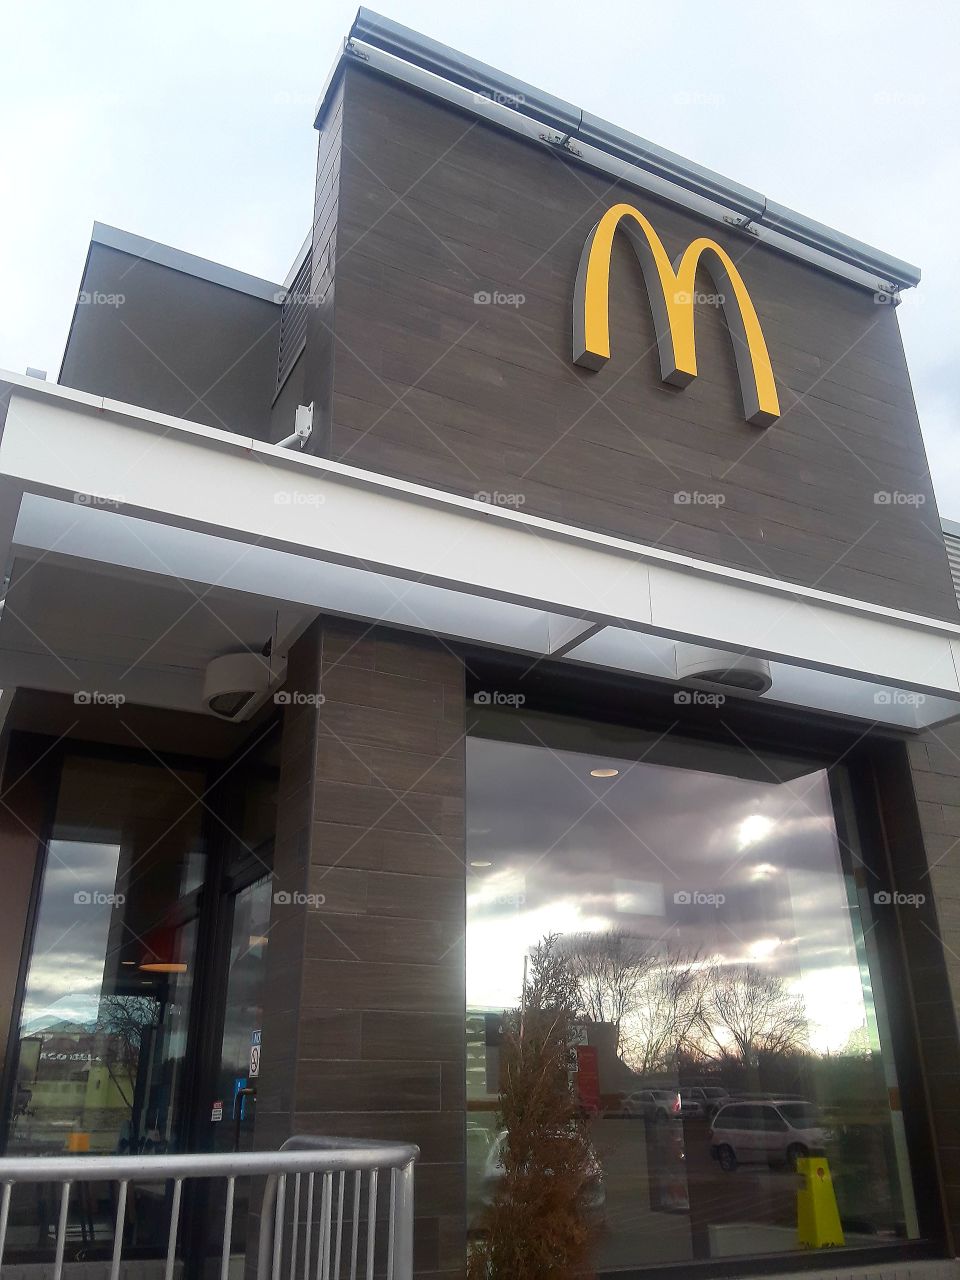 McDonalds Restaurant Sign Building